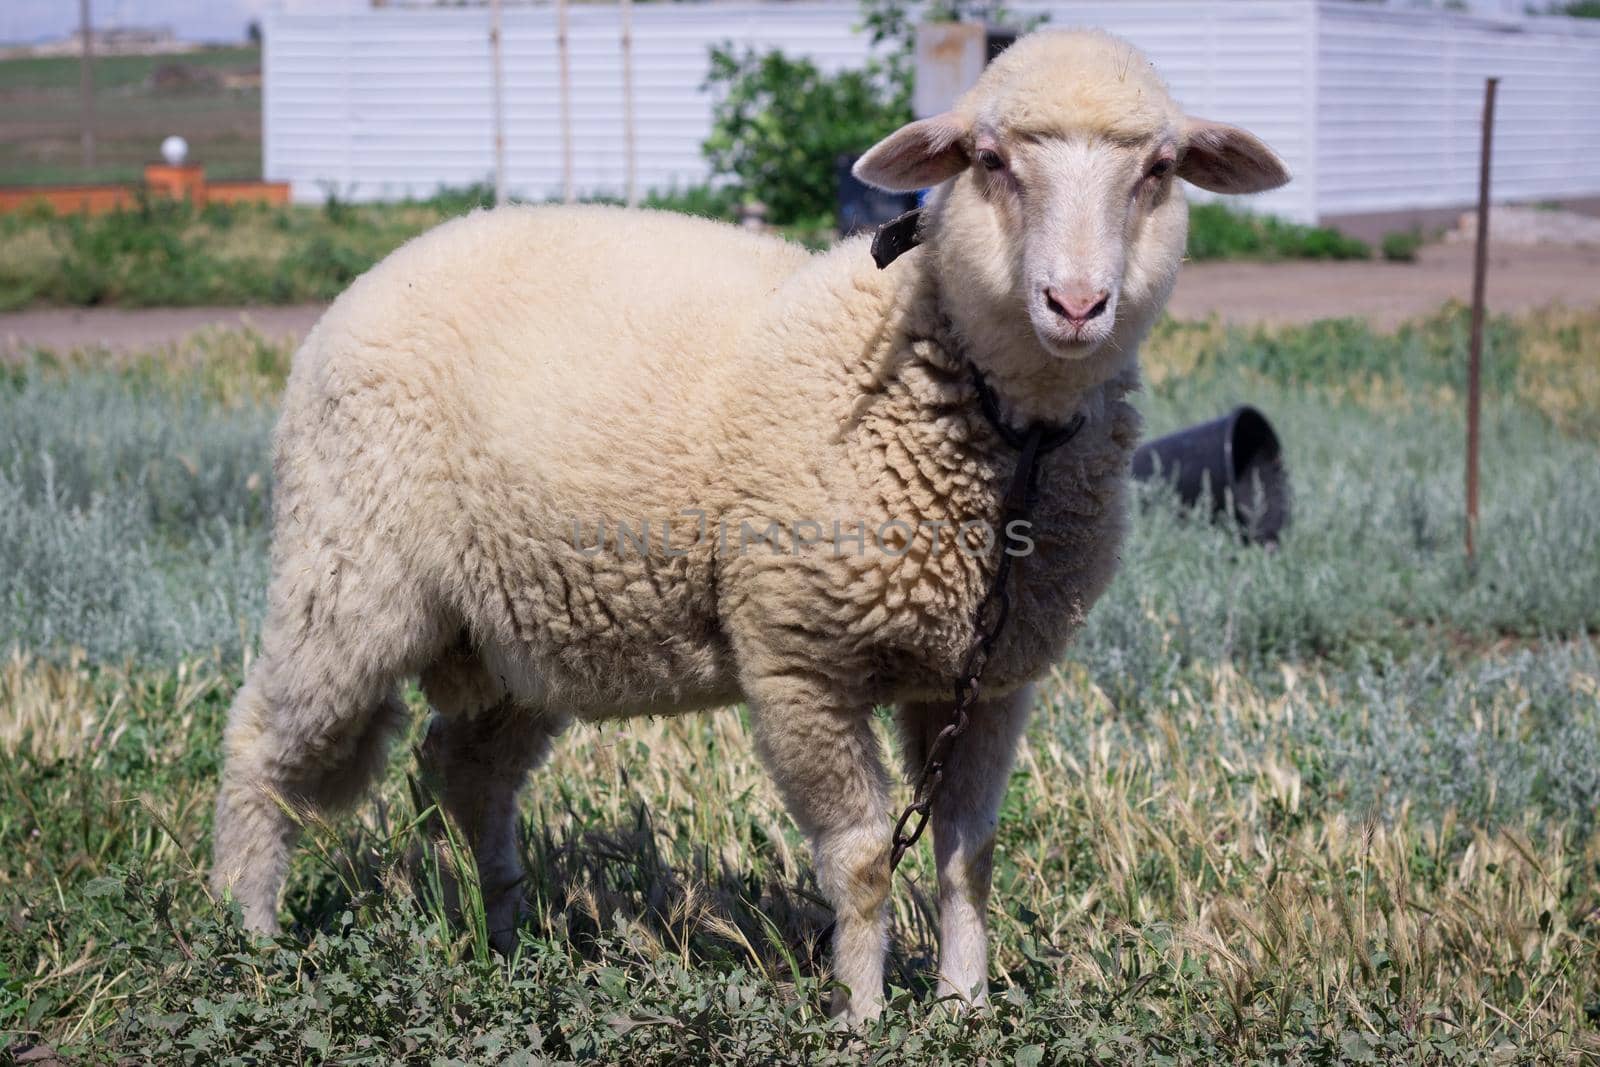 White sheep stands on green grass pasture breeding by VeraVerano